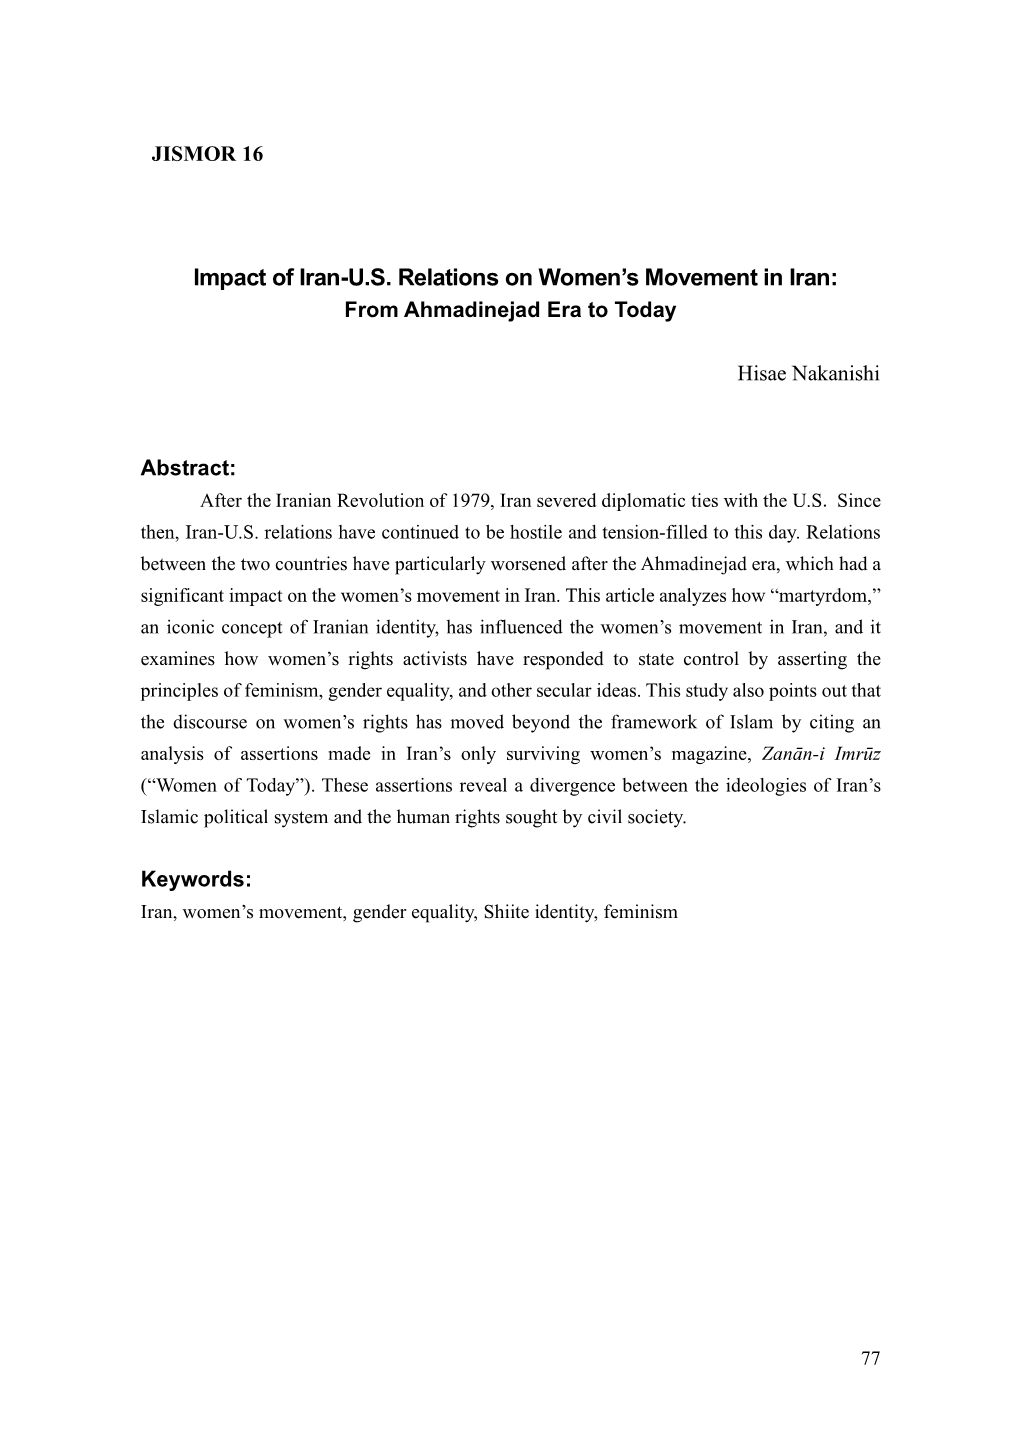 Impact of Iran-U.S. Relations on Women's Movement in Iran